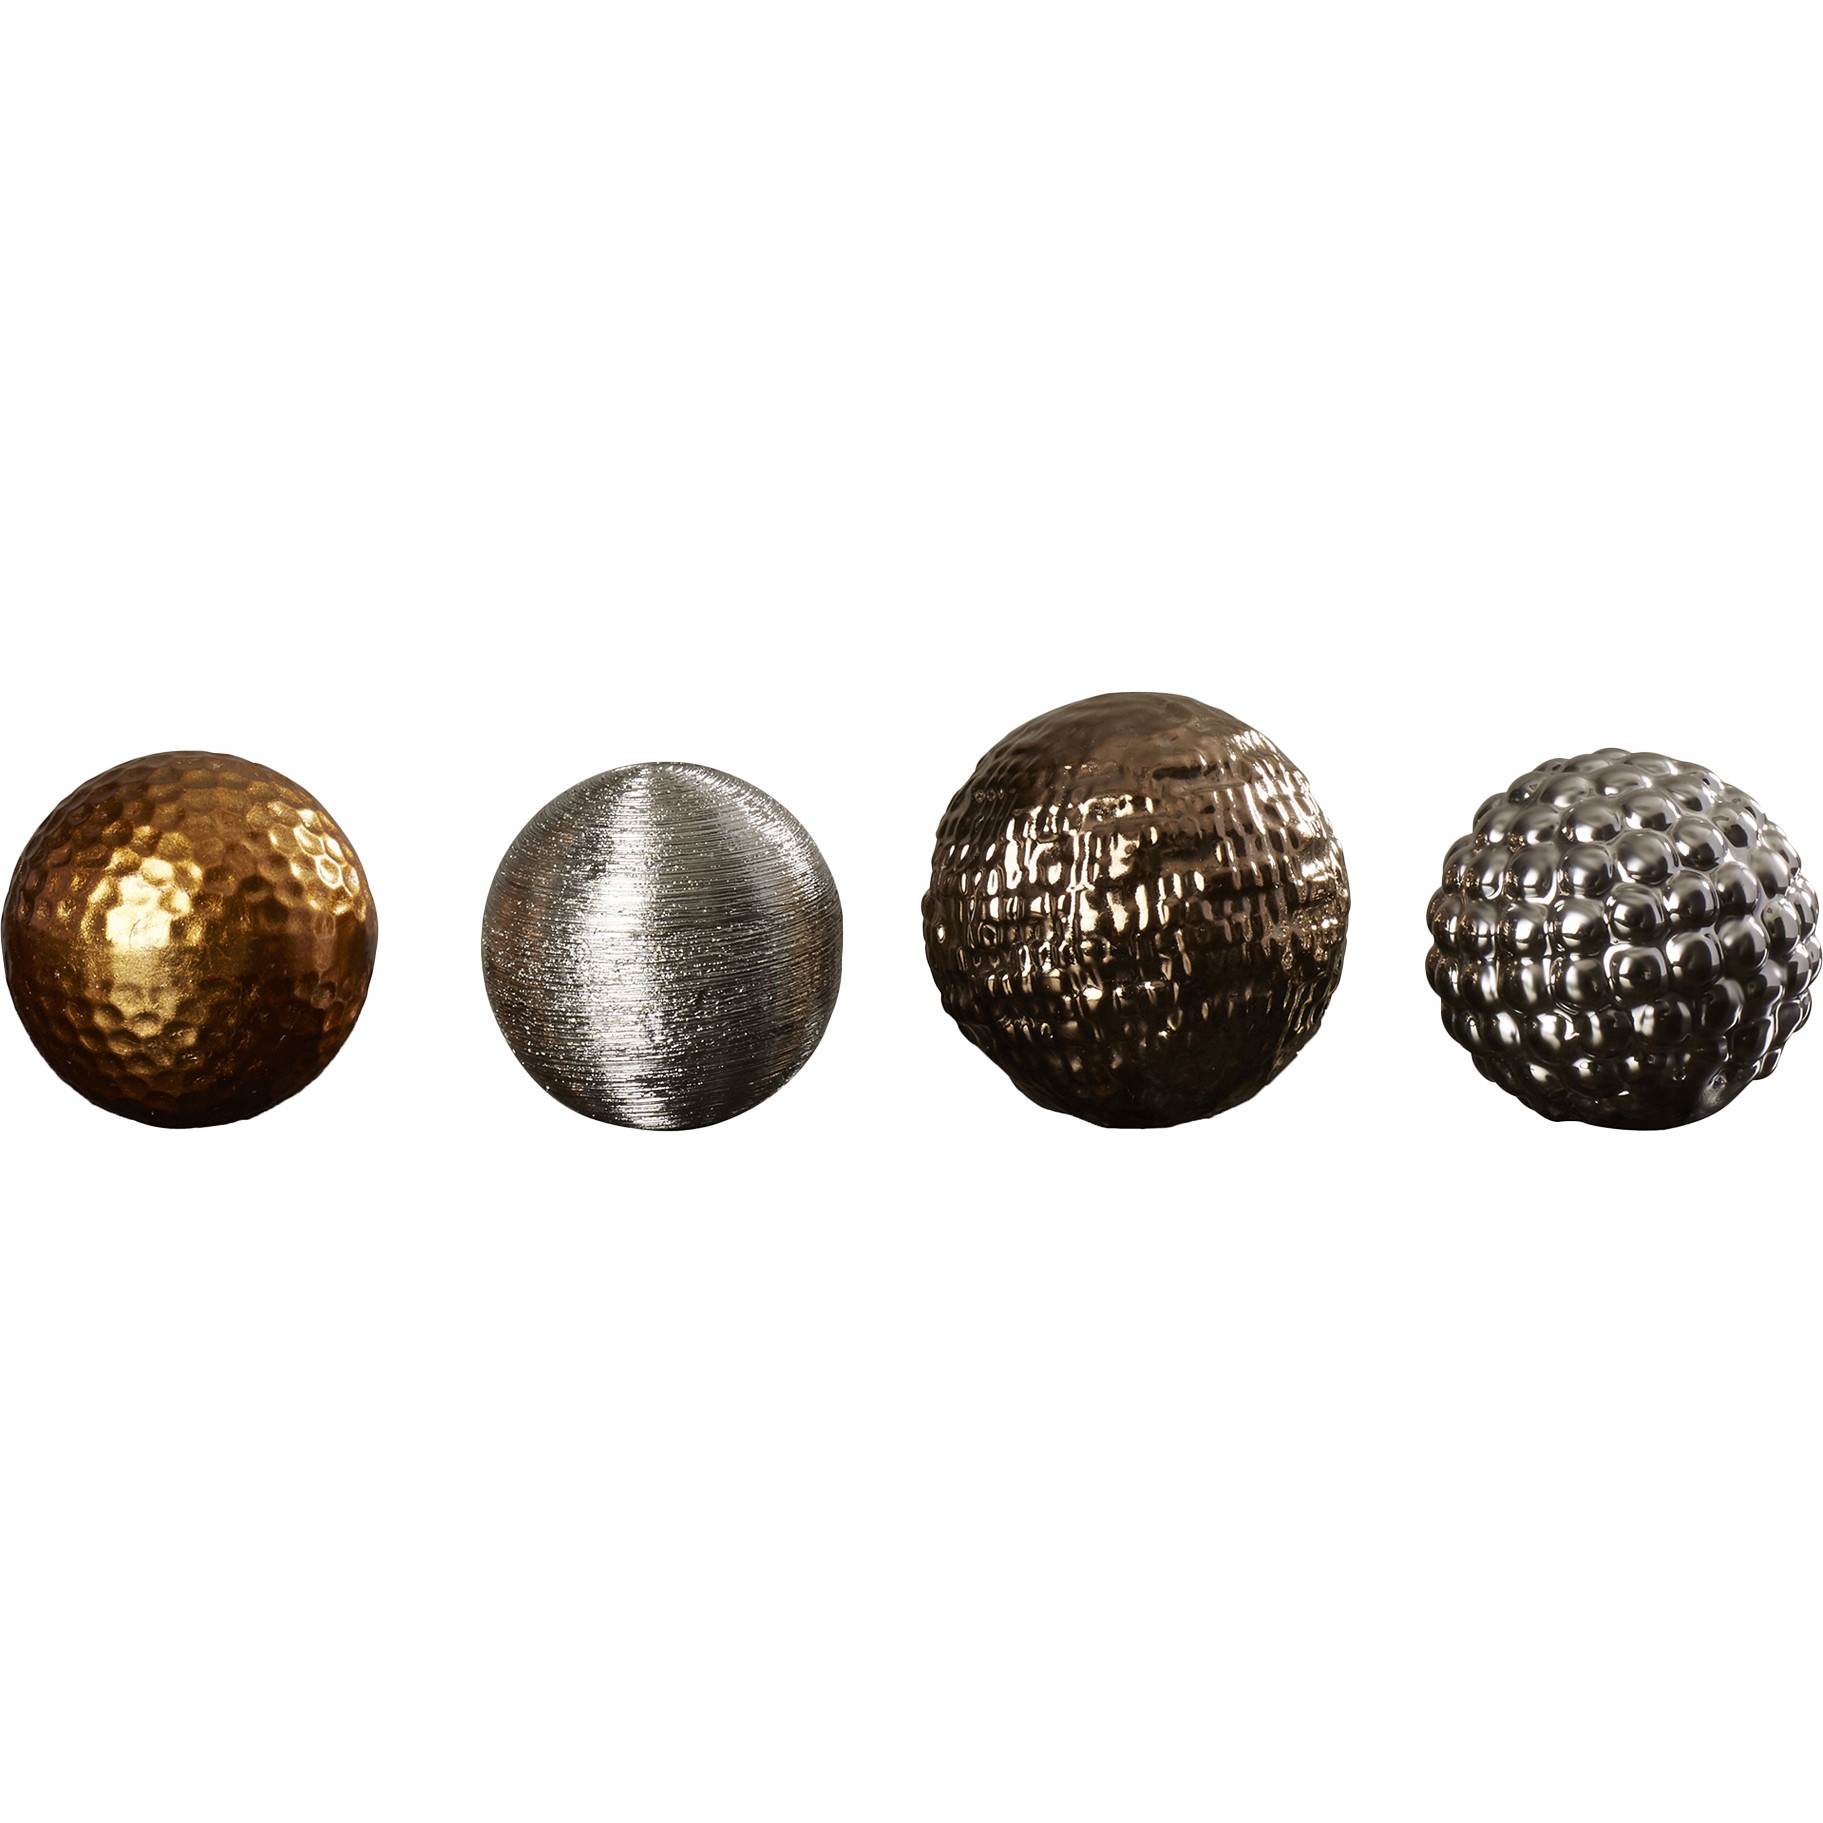 Henley Decorative Ball Sculpture (Set of 4) - Image 0